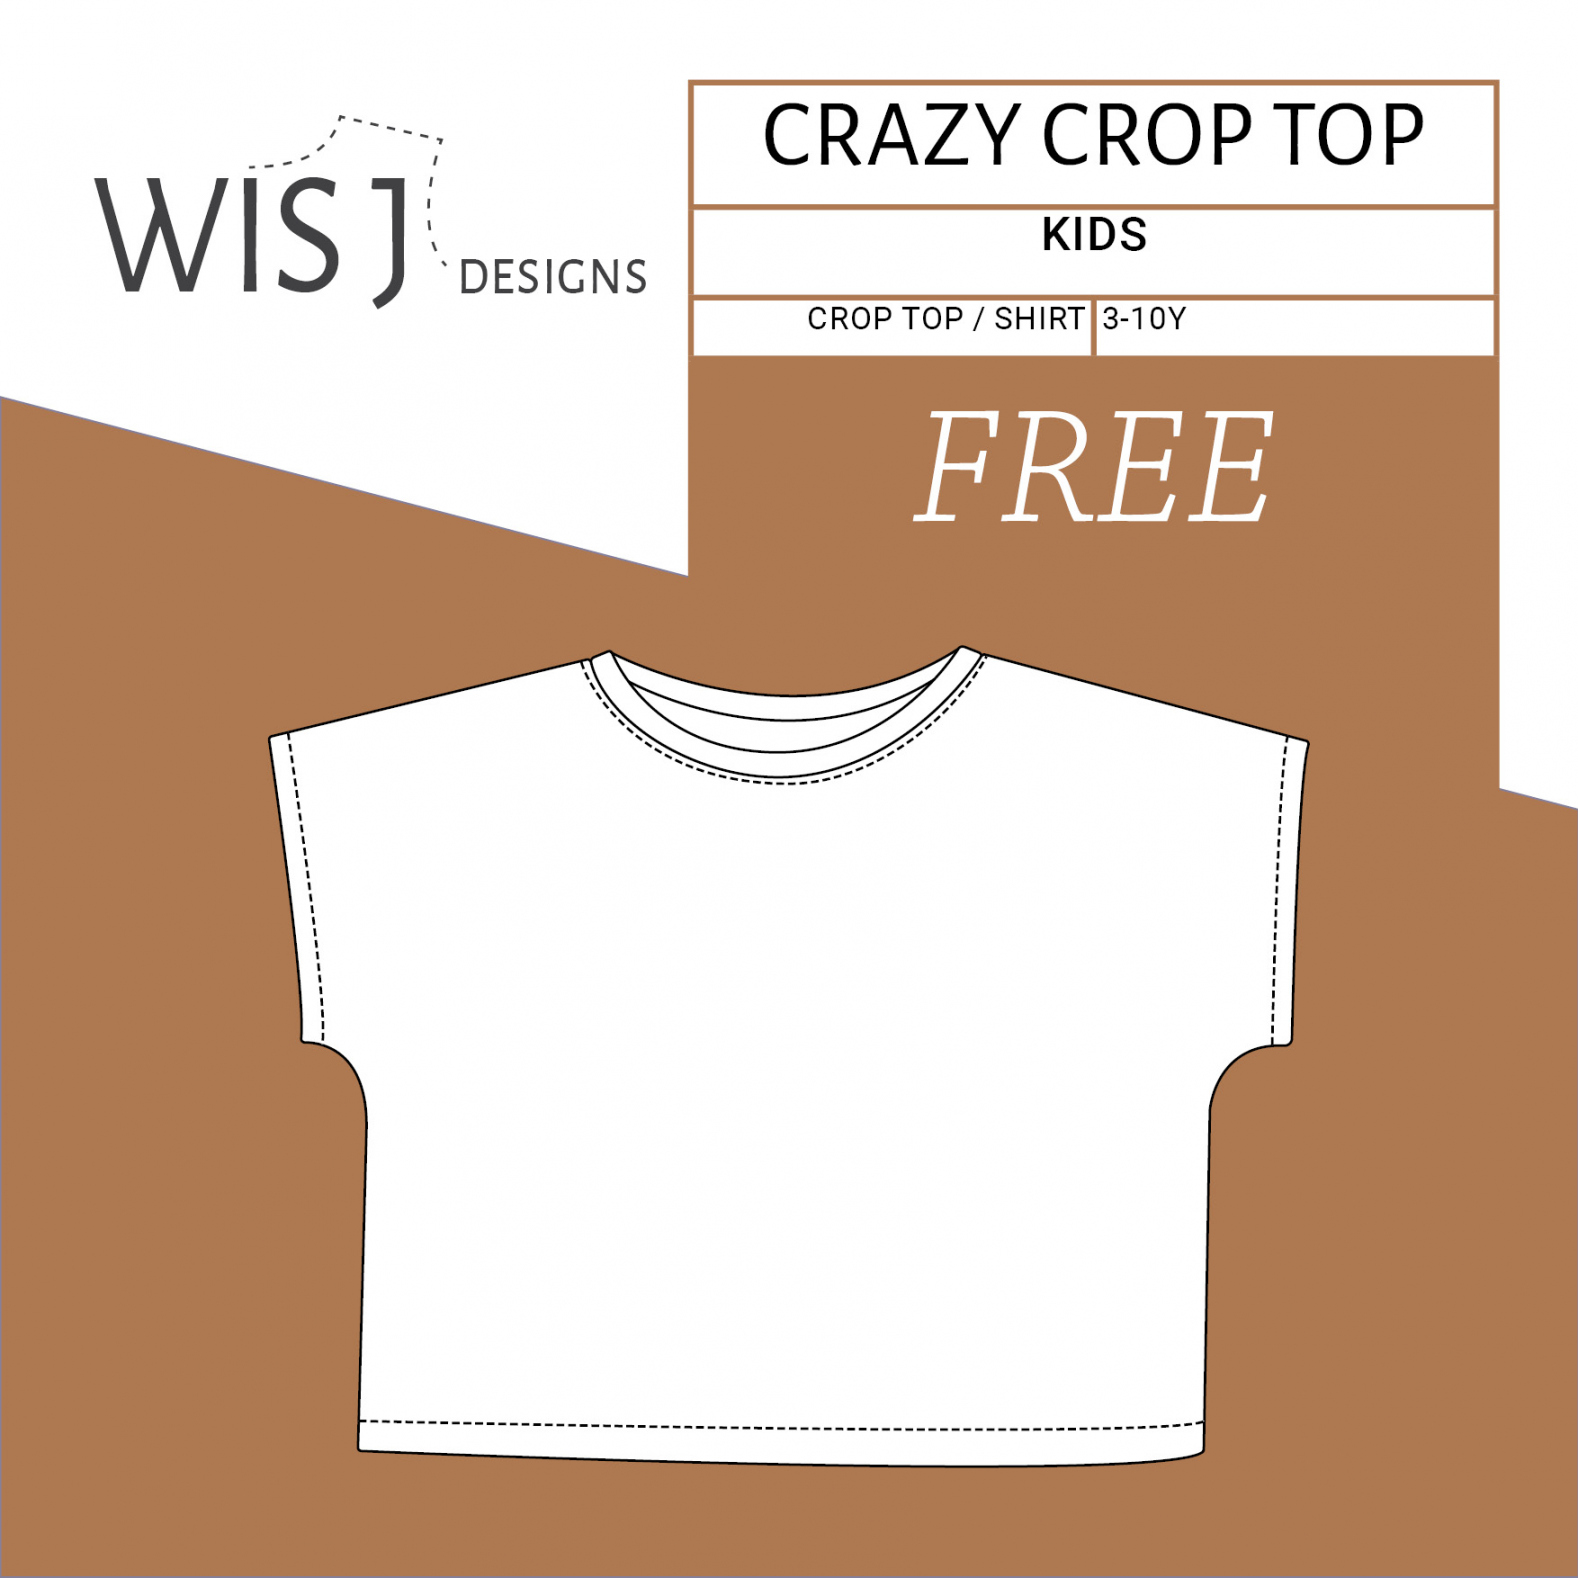 Crazy crop top free pdf sewing pattern - WISJ Designs - FREE Printables - Printable Free Crop Top Sewing Pattern